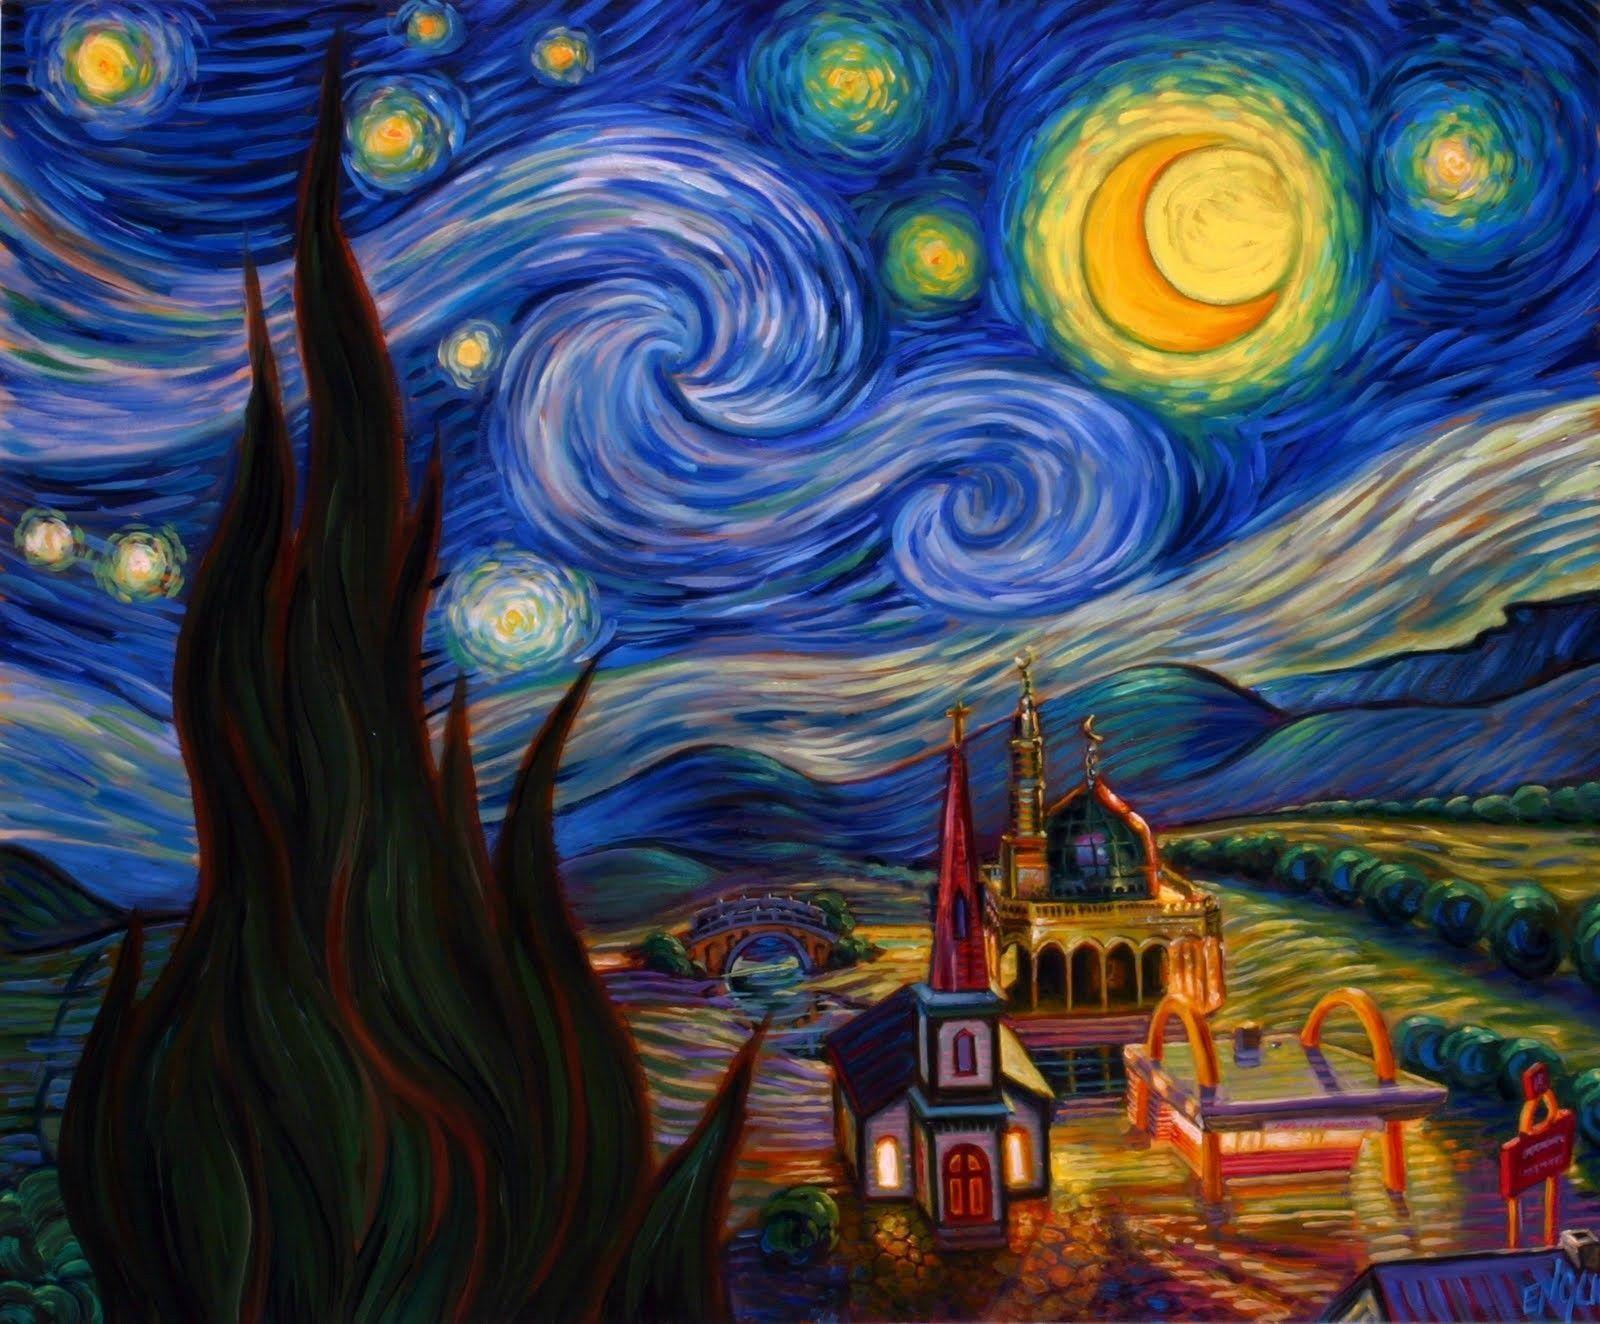 Painting of Vincent Van Gogh